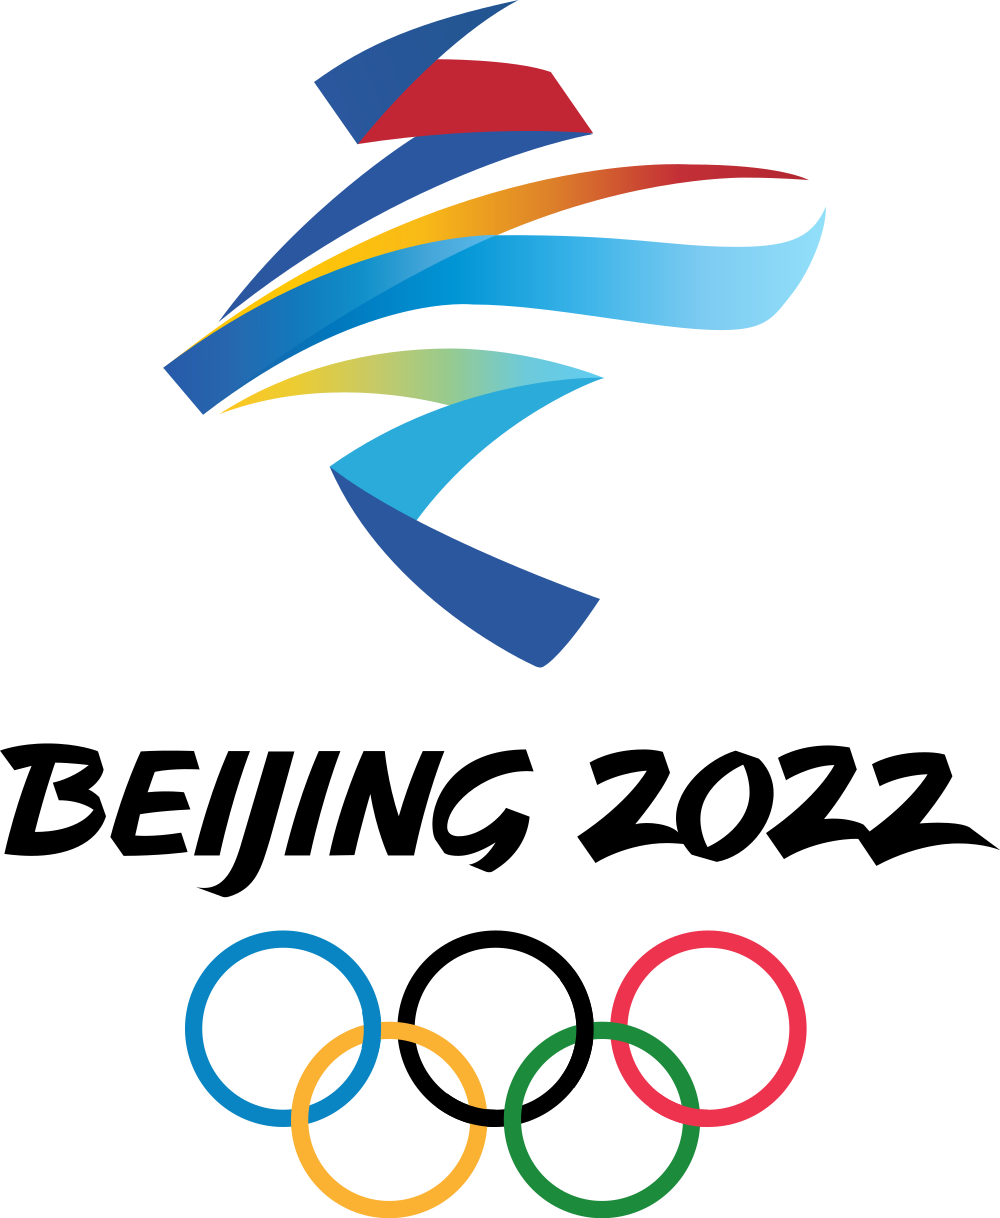 2022 Beijing Winter Olympics logo png transparent